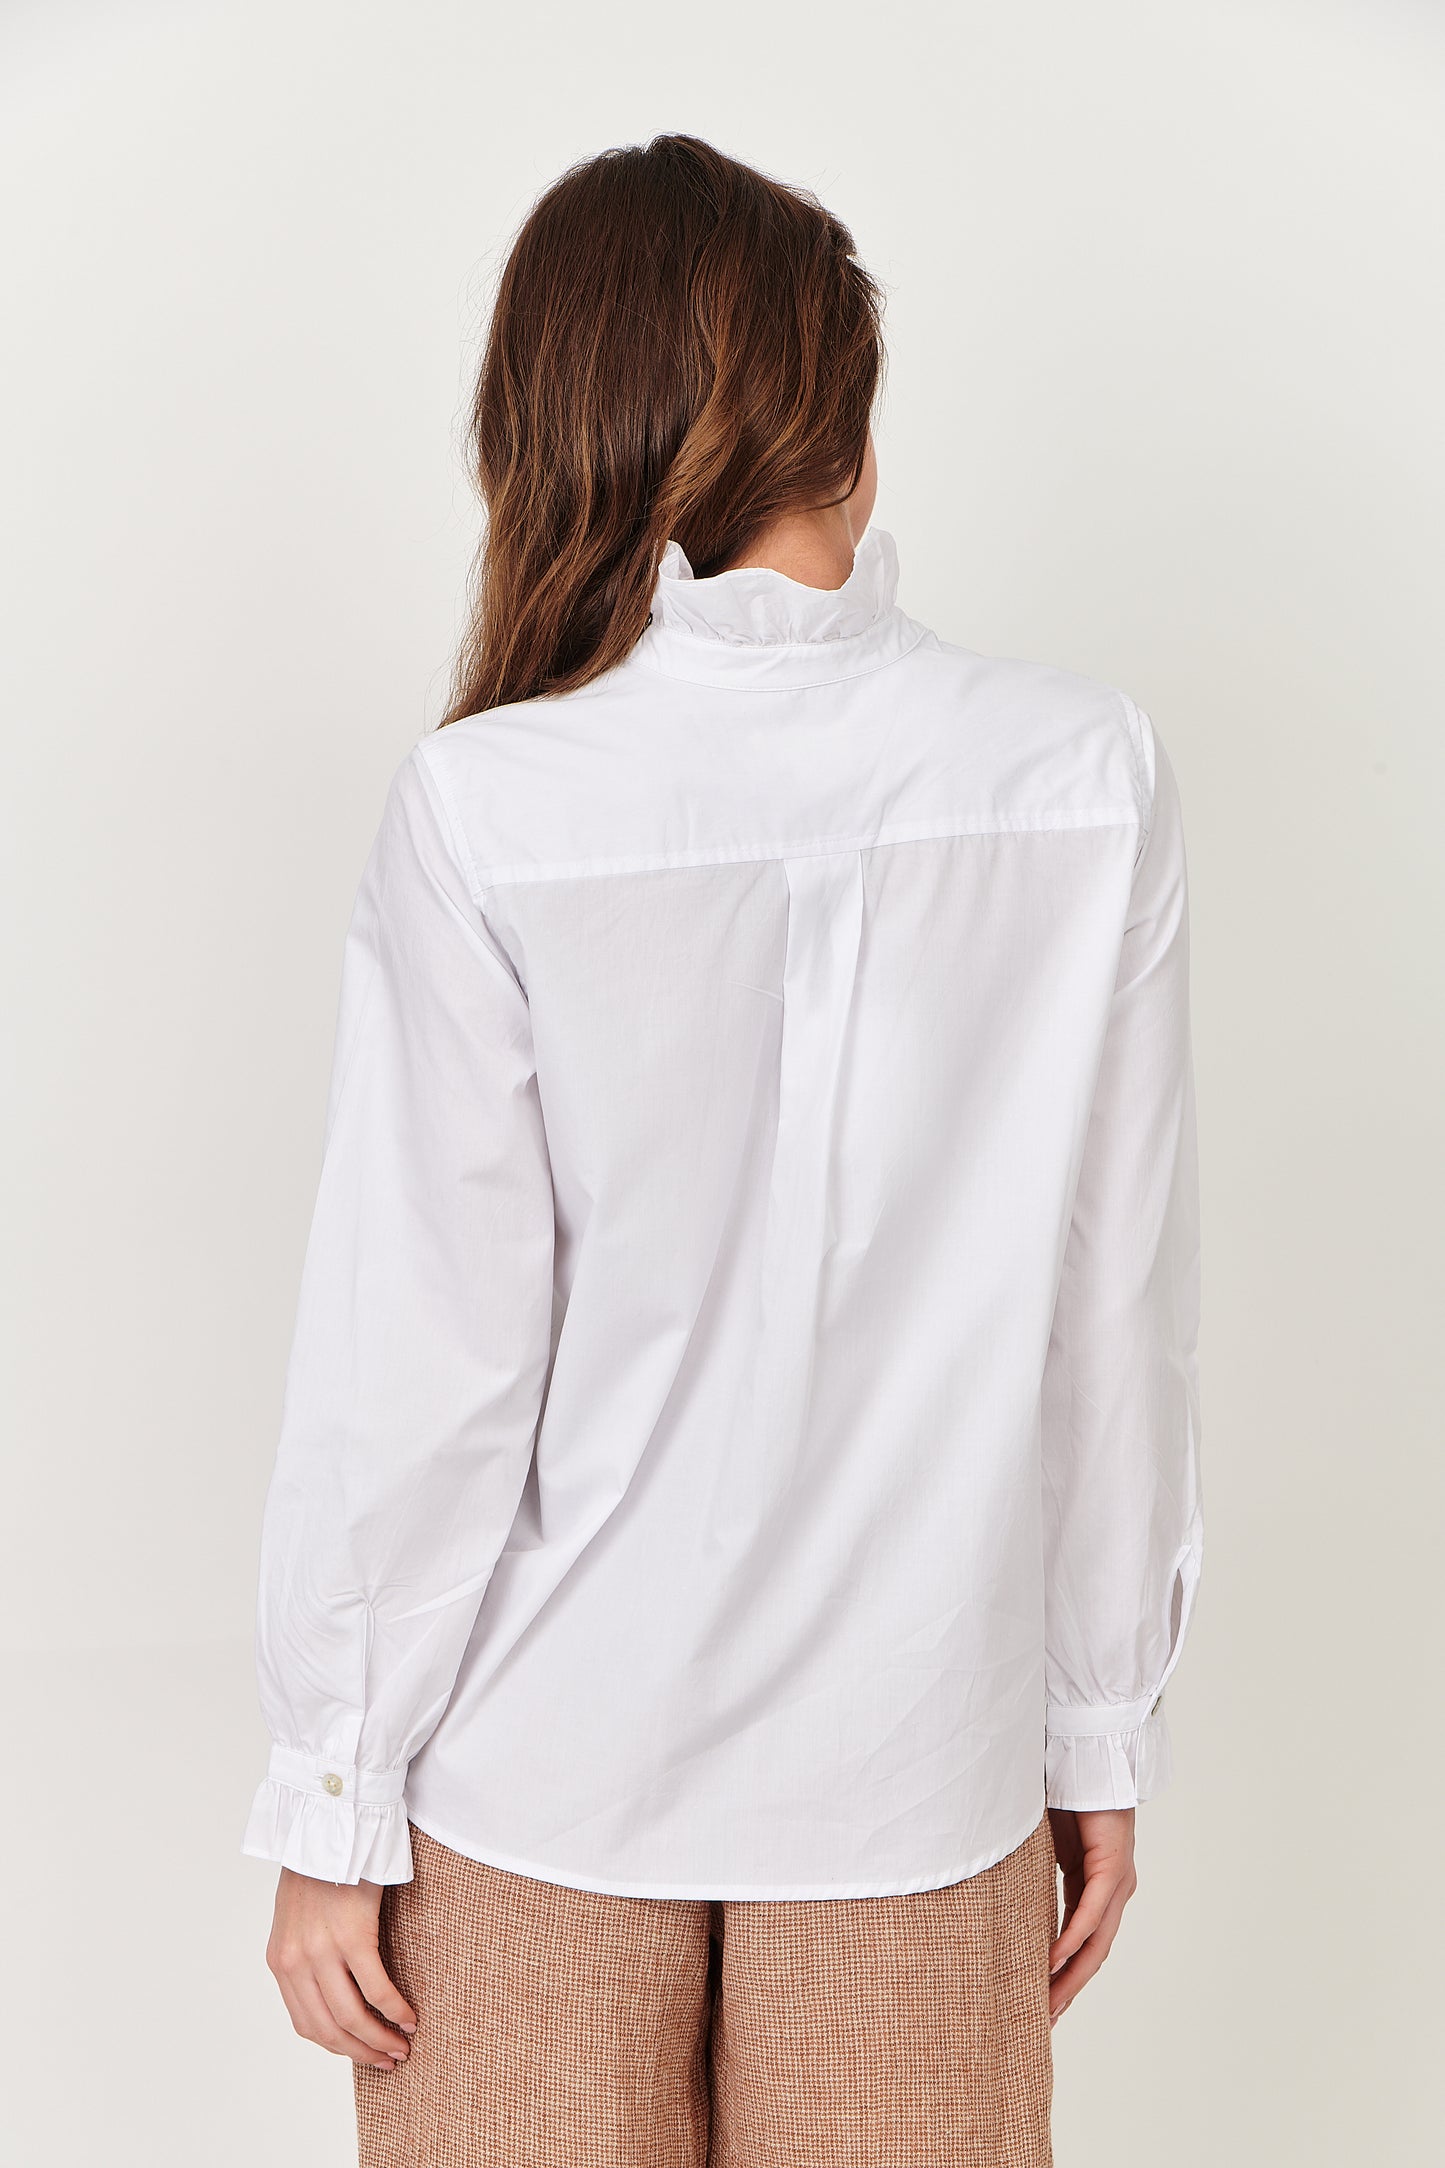 Naturals by O & J Ruffle Collar Shirt - White GA491